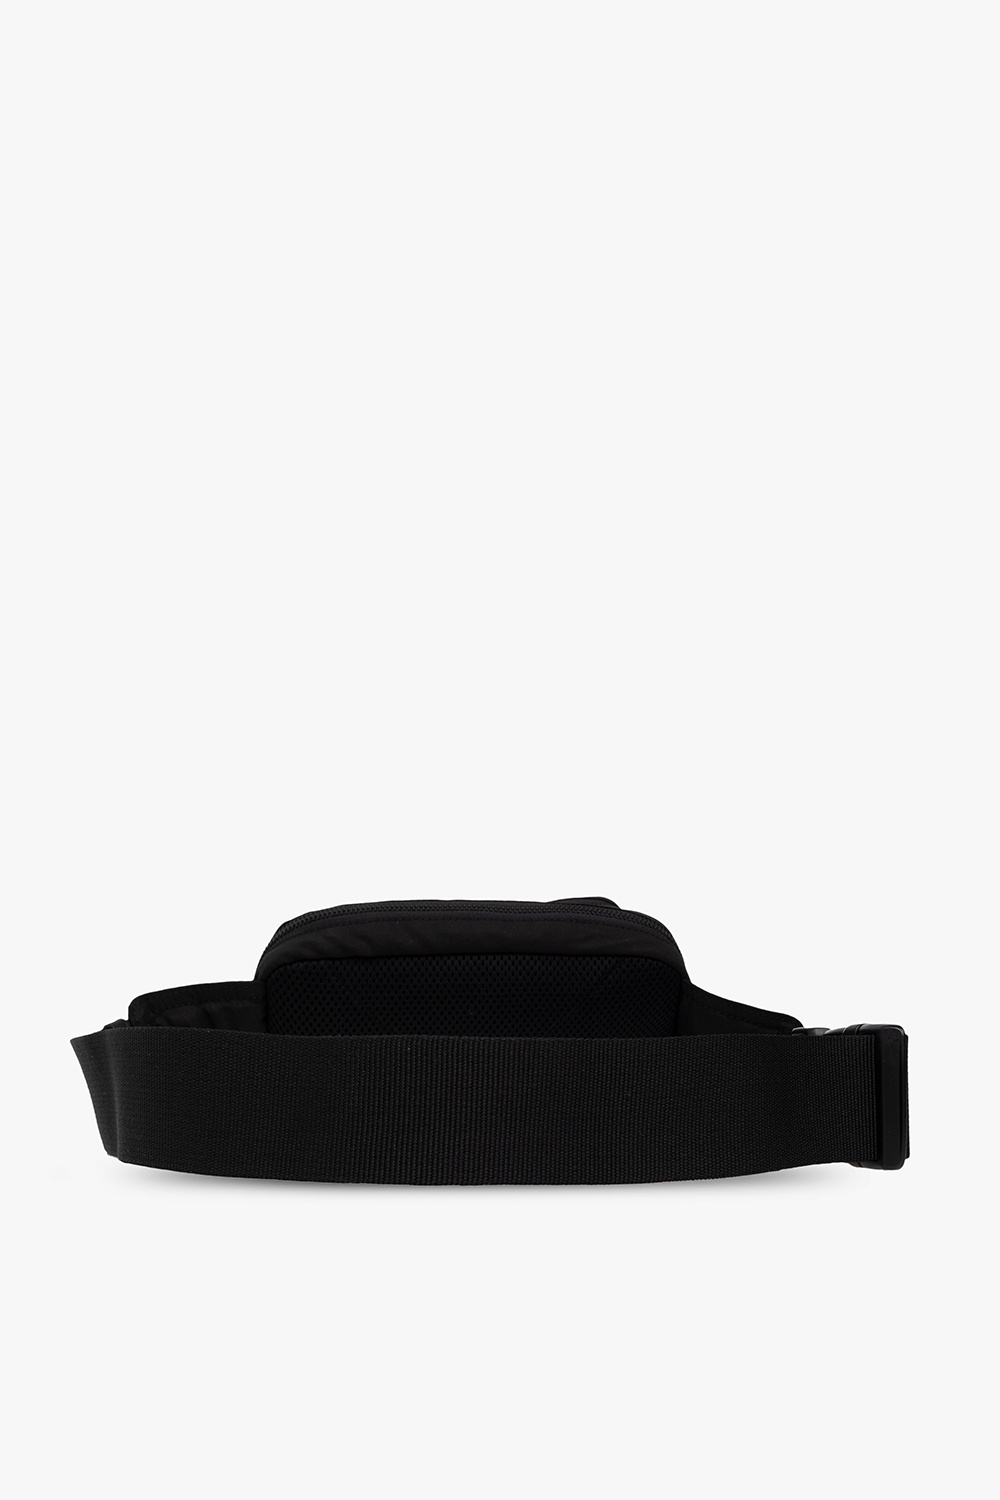 Kenzo Alexander Wang Scrunchie leather top handle bag